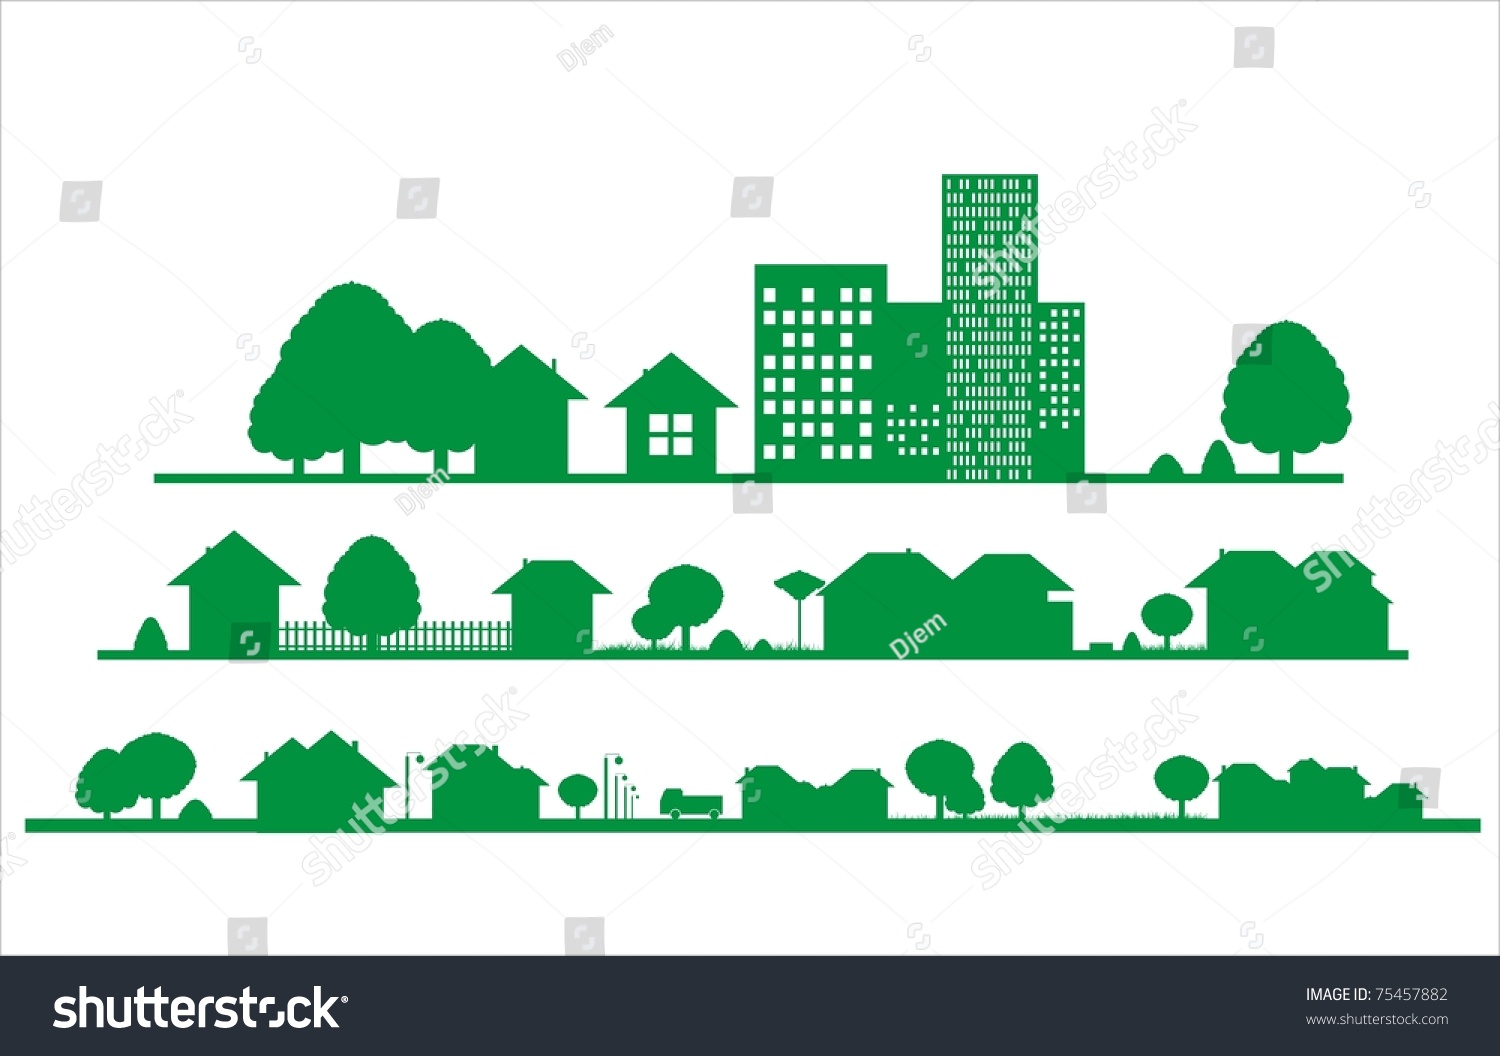 City Vector Background - 75457882 : Shutterstock